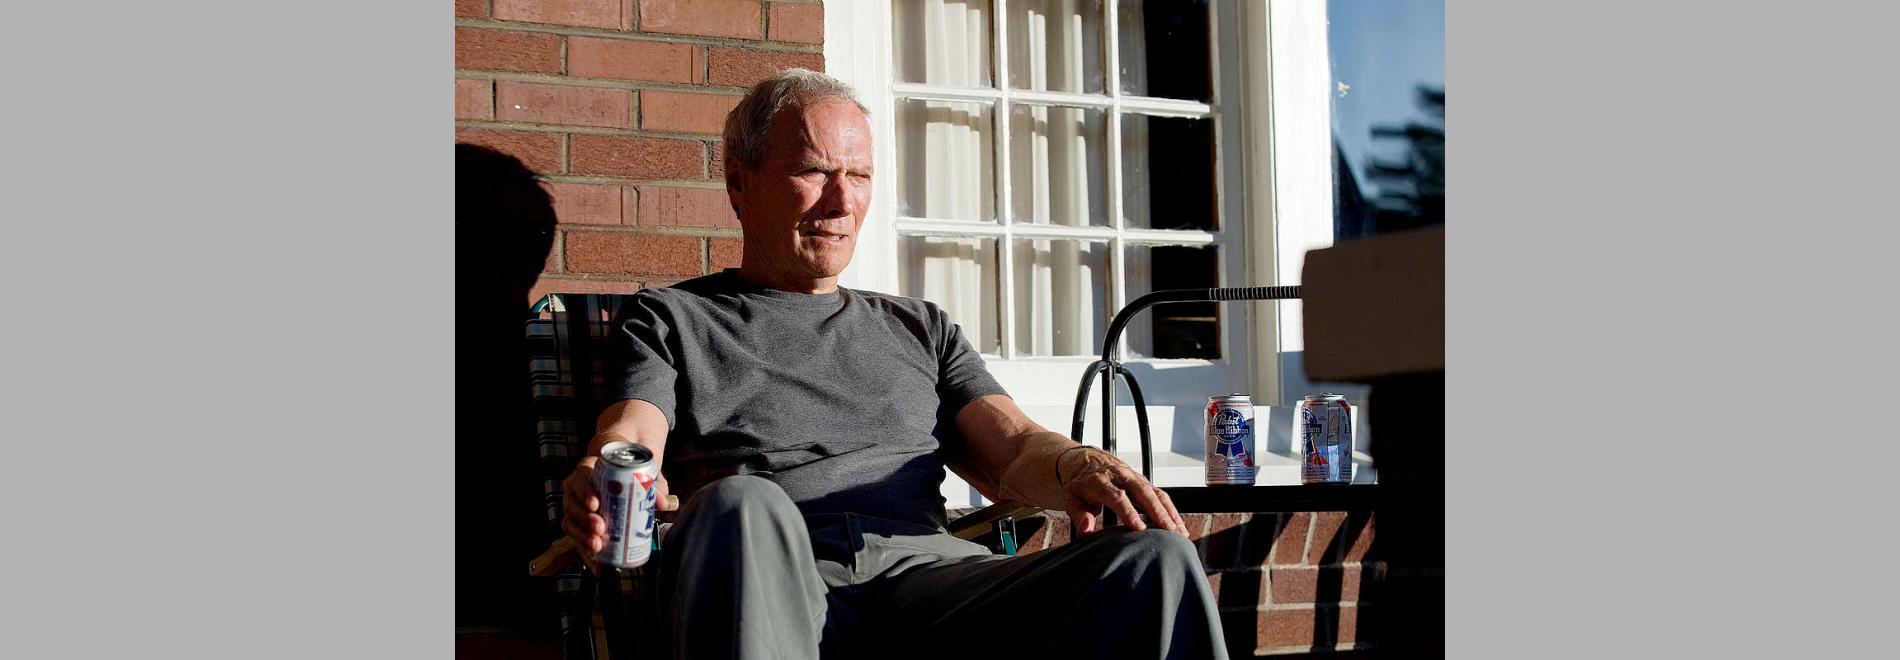 Gran Torino (Clint Eastwood, 2008)